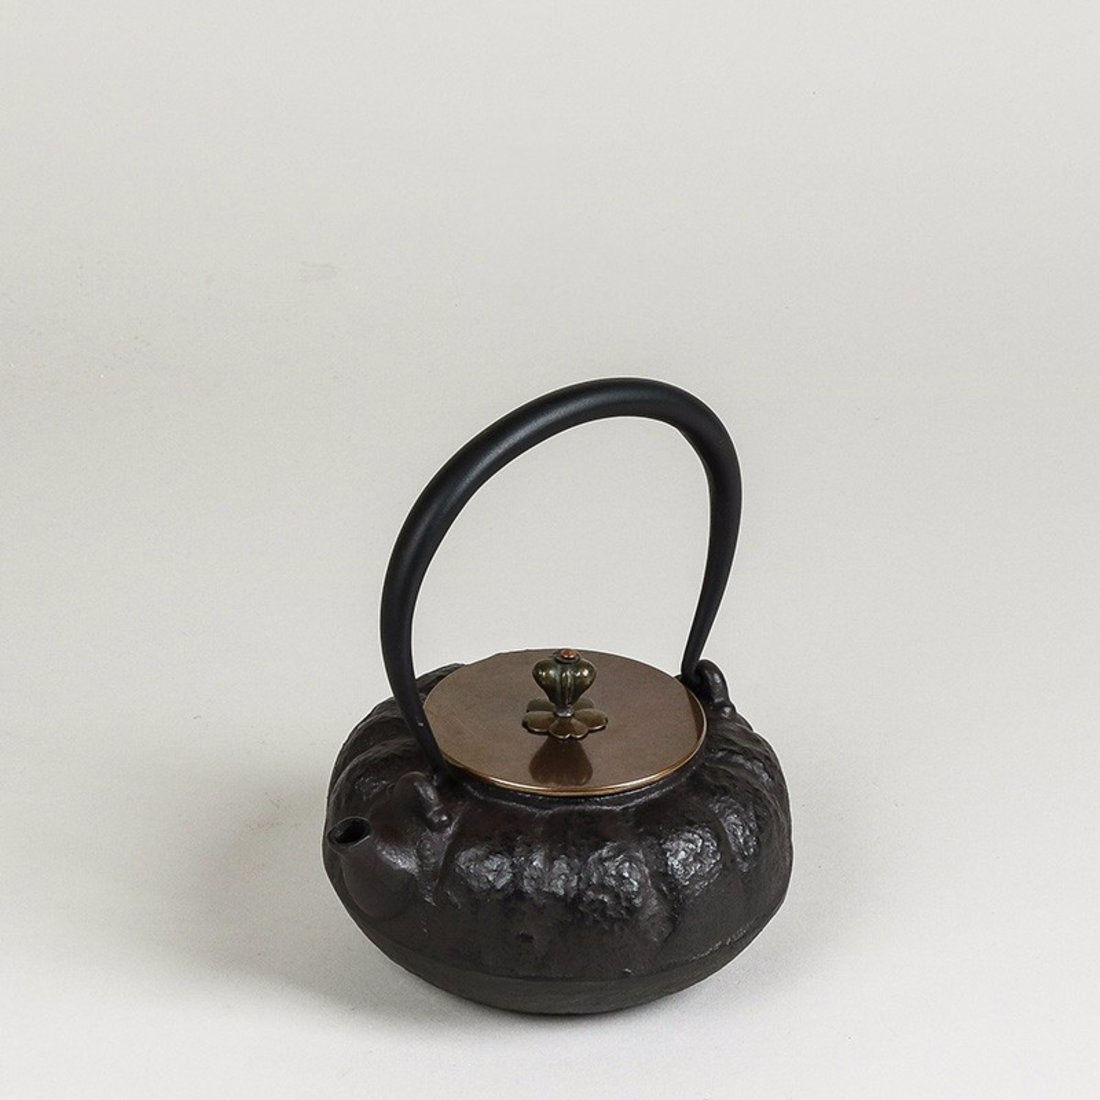 「煮茶壶」手提梁铁壶